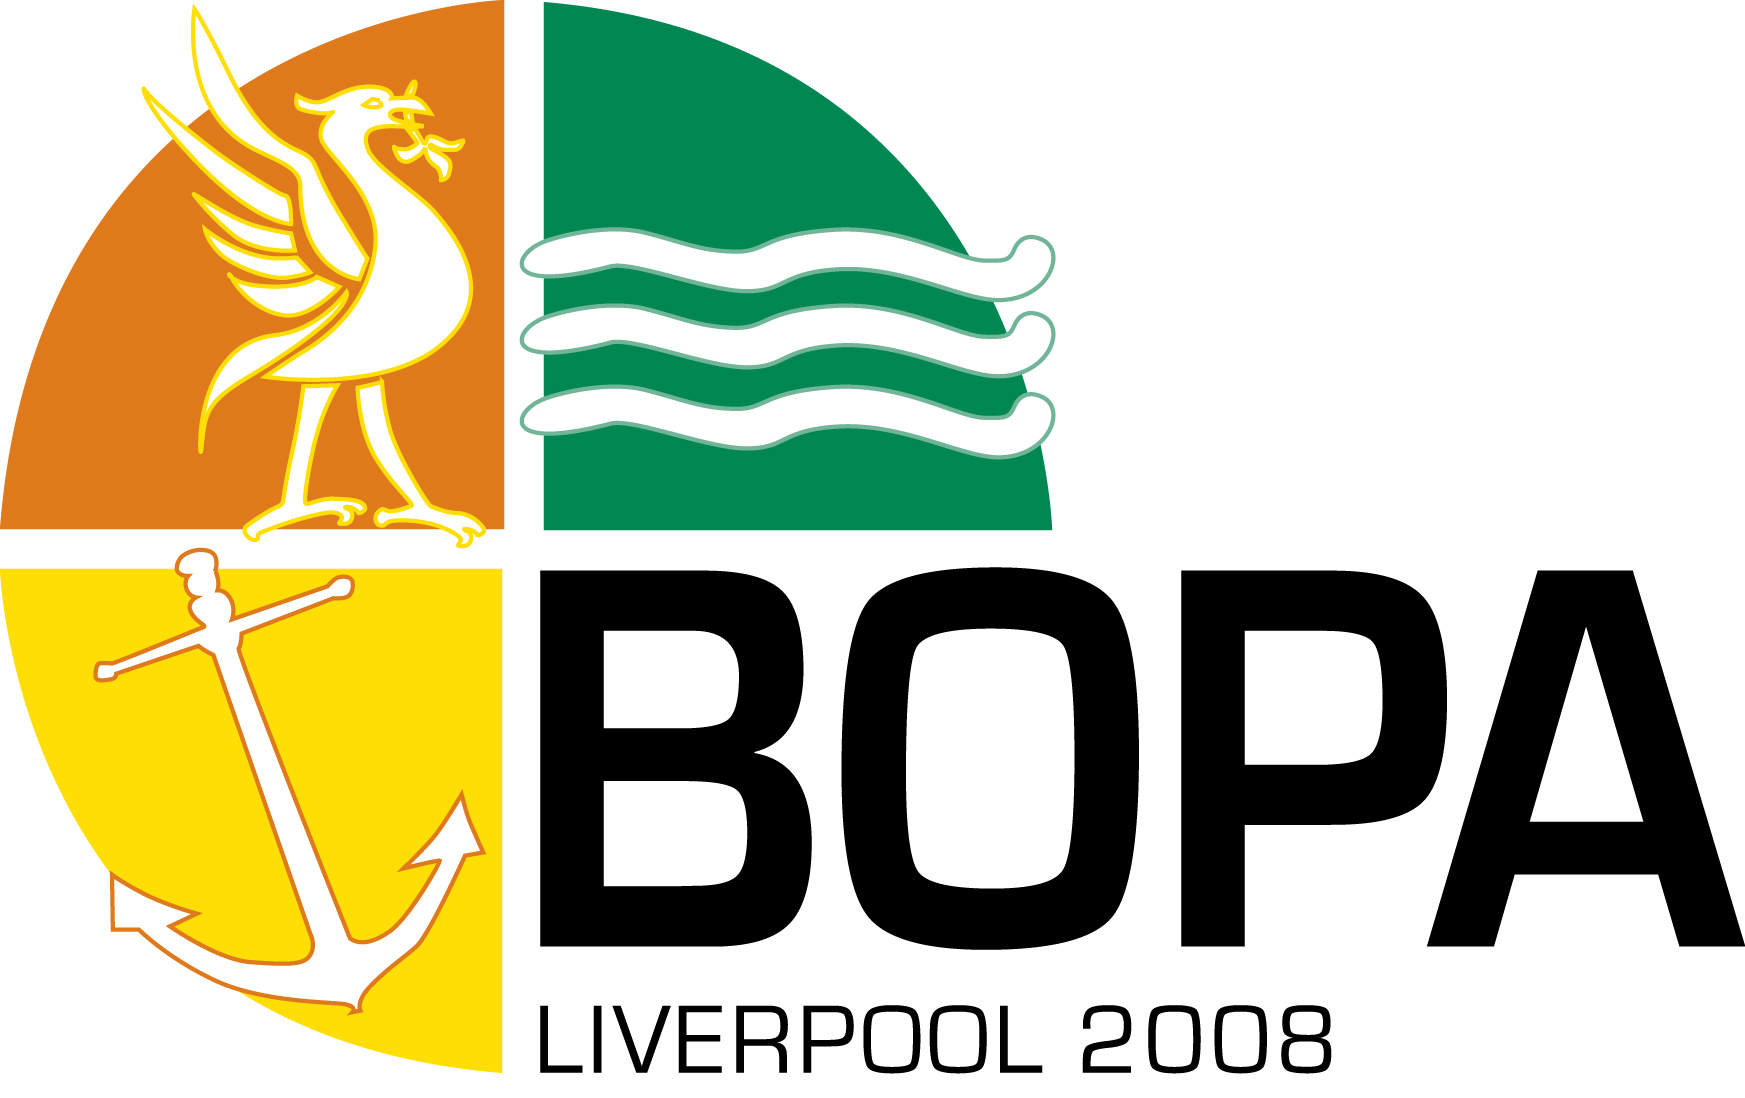 11th Annual BOPA Symposium Liverpool 2008 logo